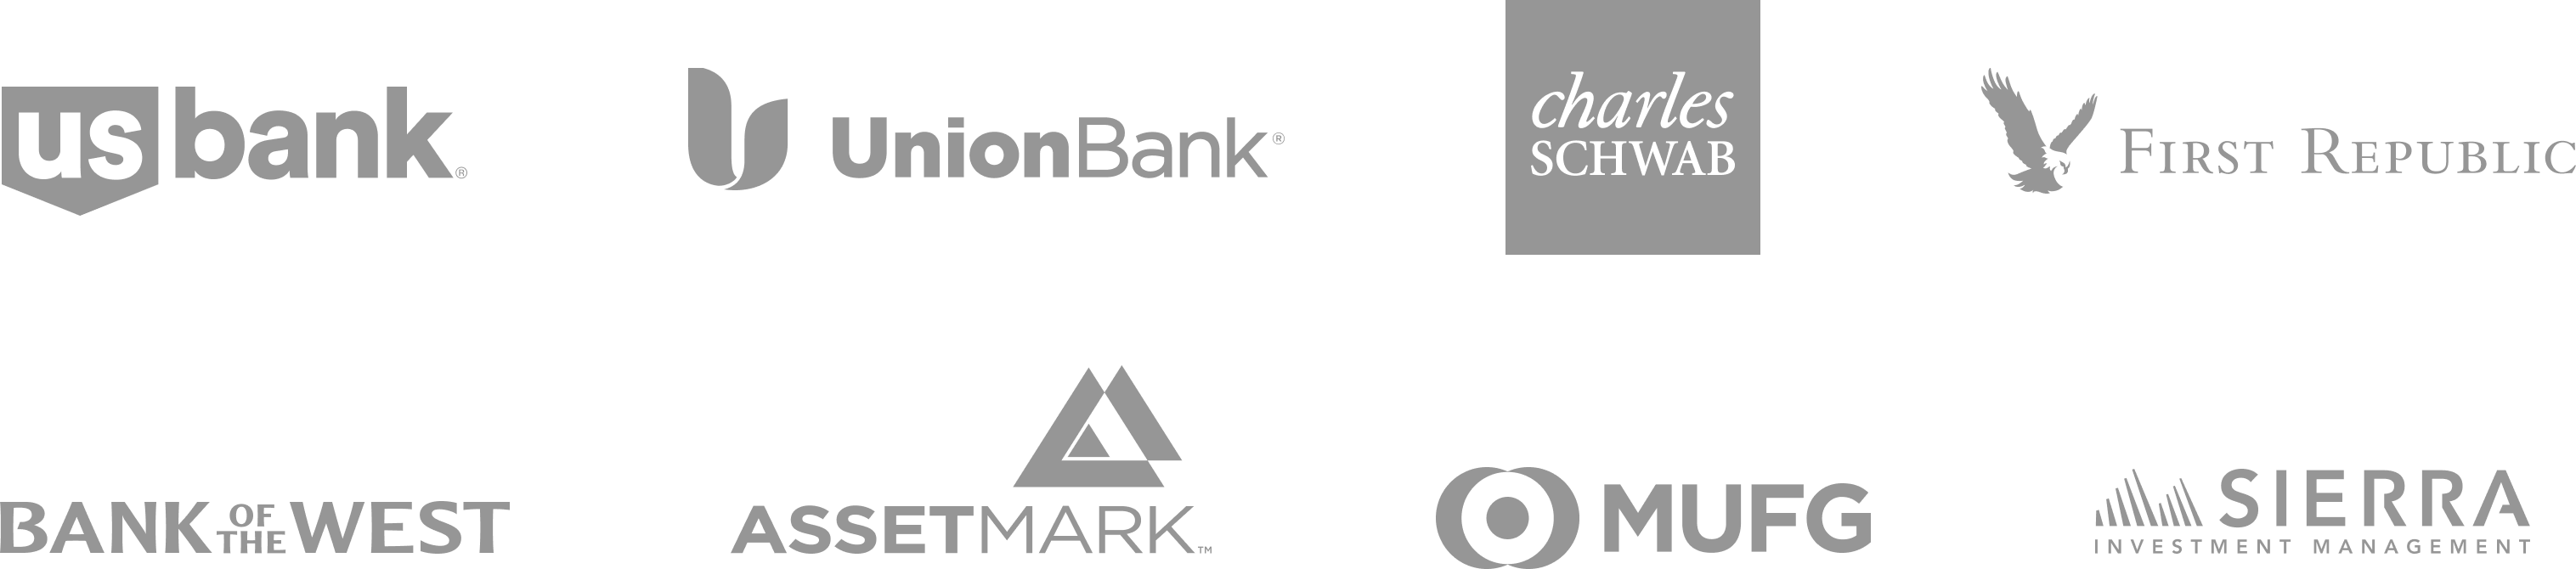 U.S. Bank, Union Bank, Charles Schwab, First Republic, Bank of the West, AssetMark, MUFG, Sierra Investment Management